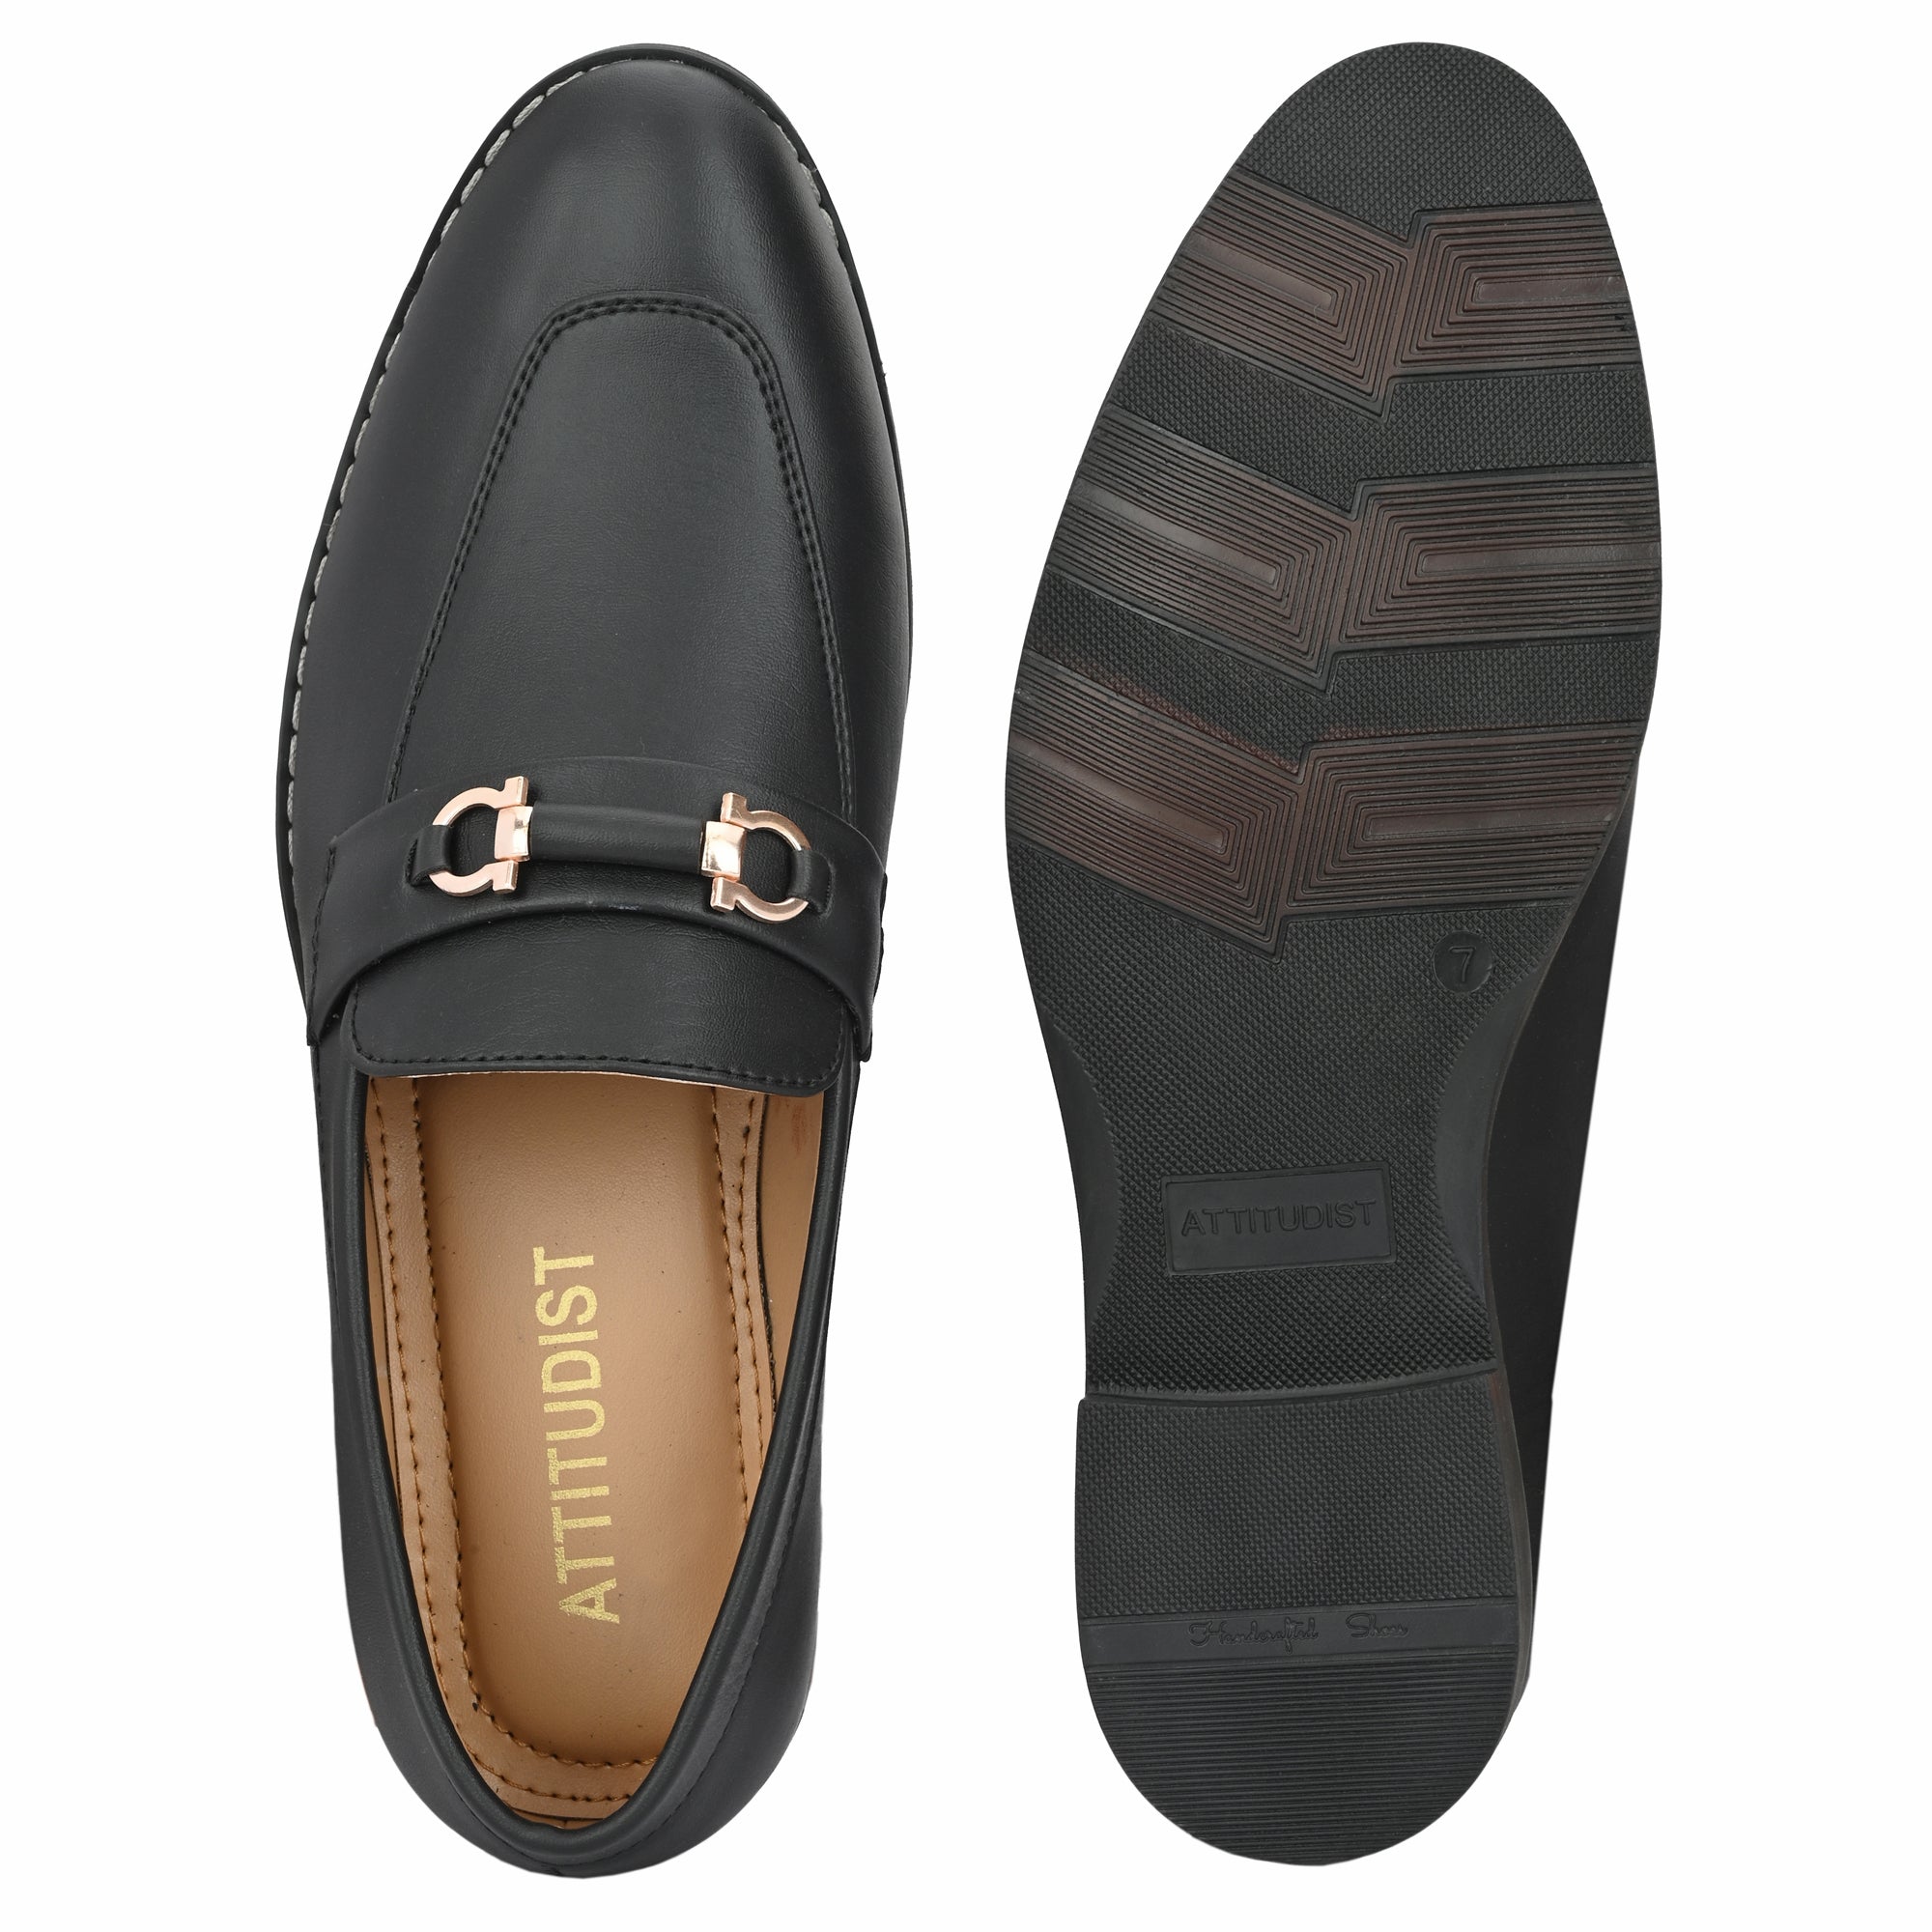 stylish-men-shoes-4046black